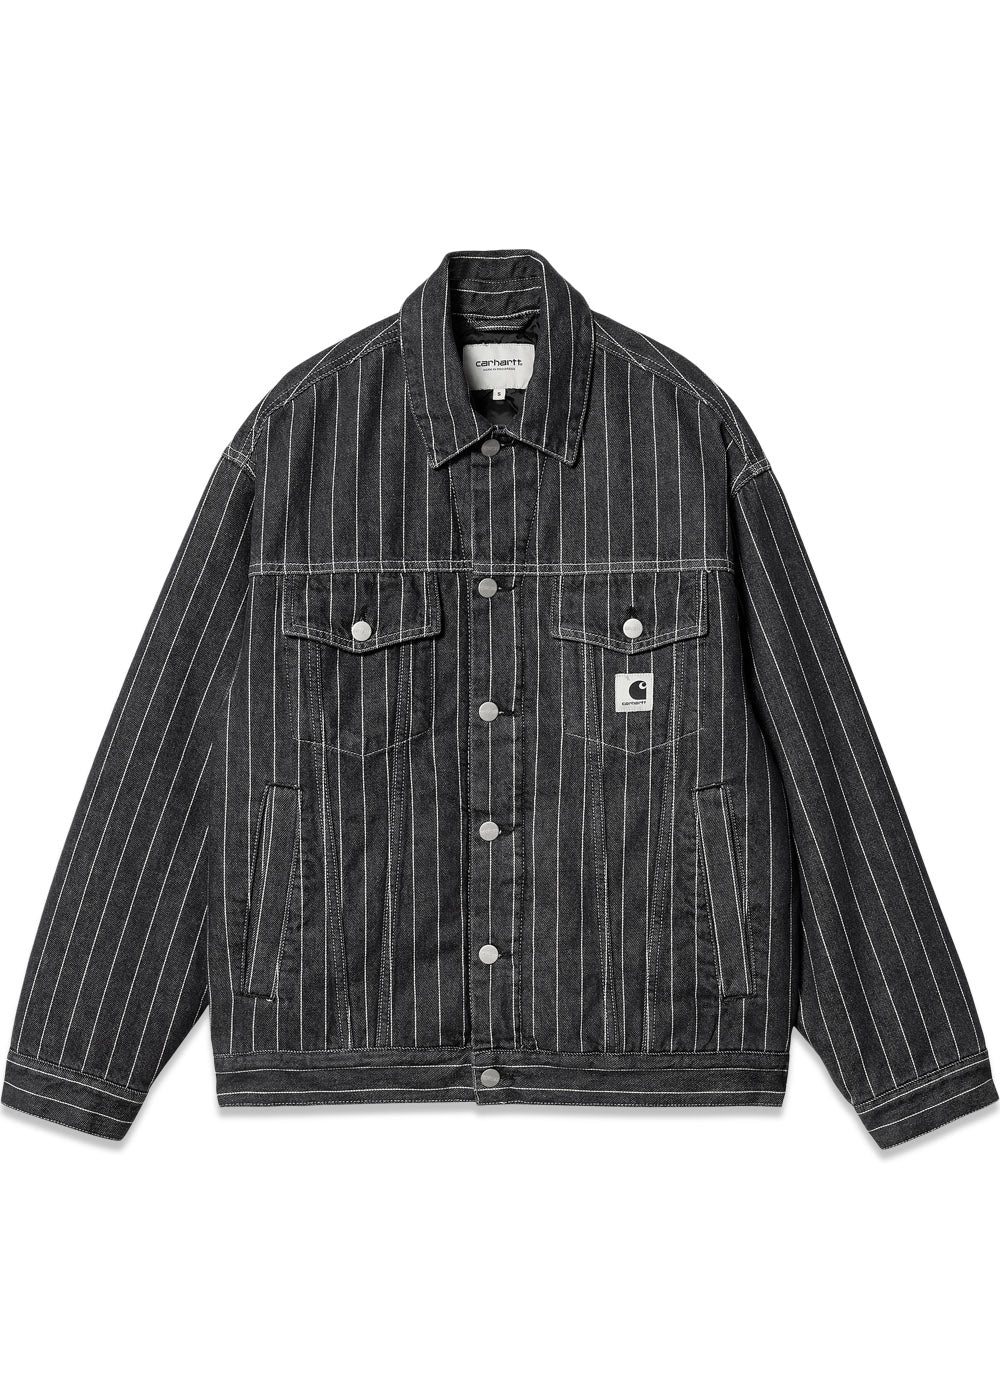 W Orlean Jacket - Orlean Stripe, Black / White Stone Washed